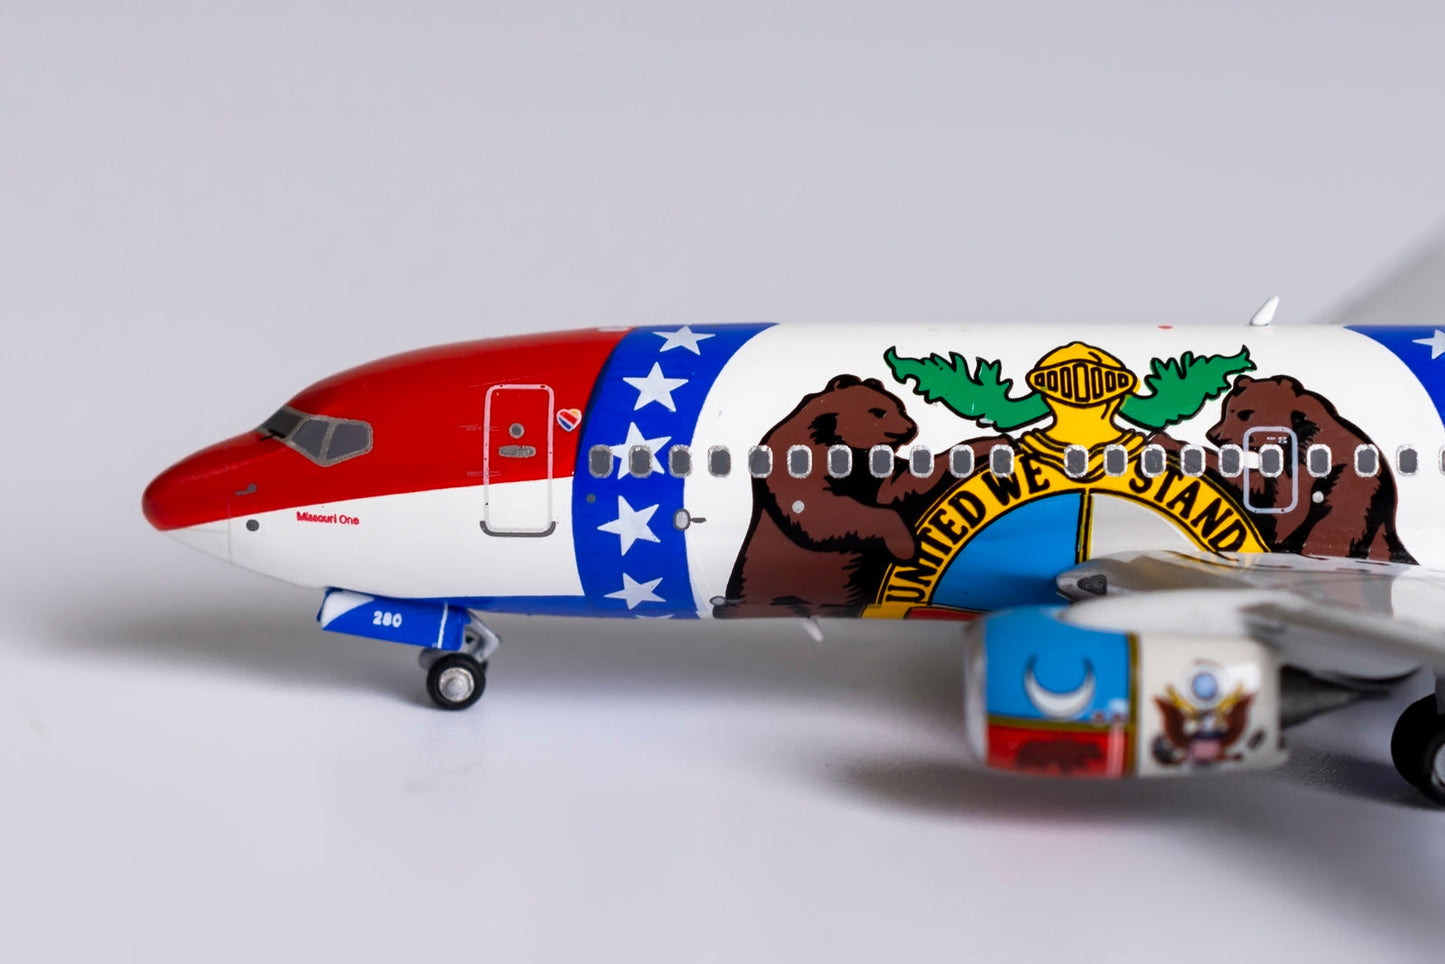 1/400 Southwest Airlines B 737-700/w "Missouri One" NG Models 77016s/d1 *Defective model*